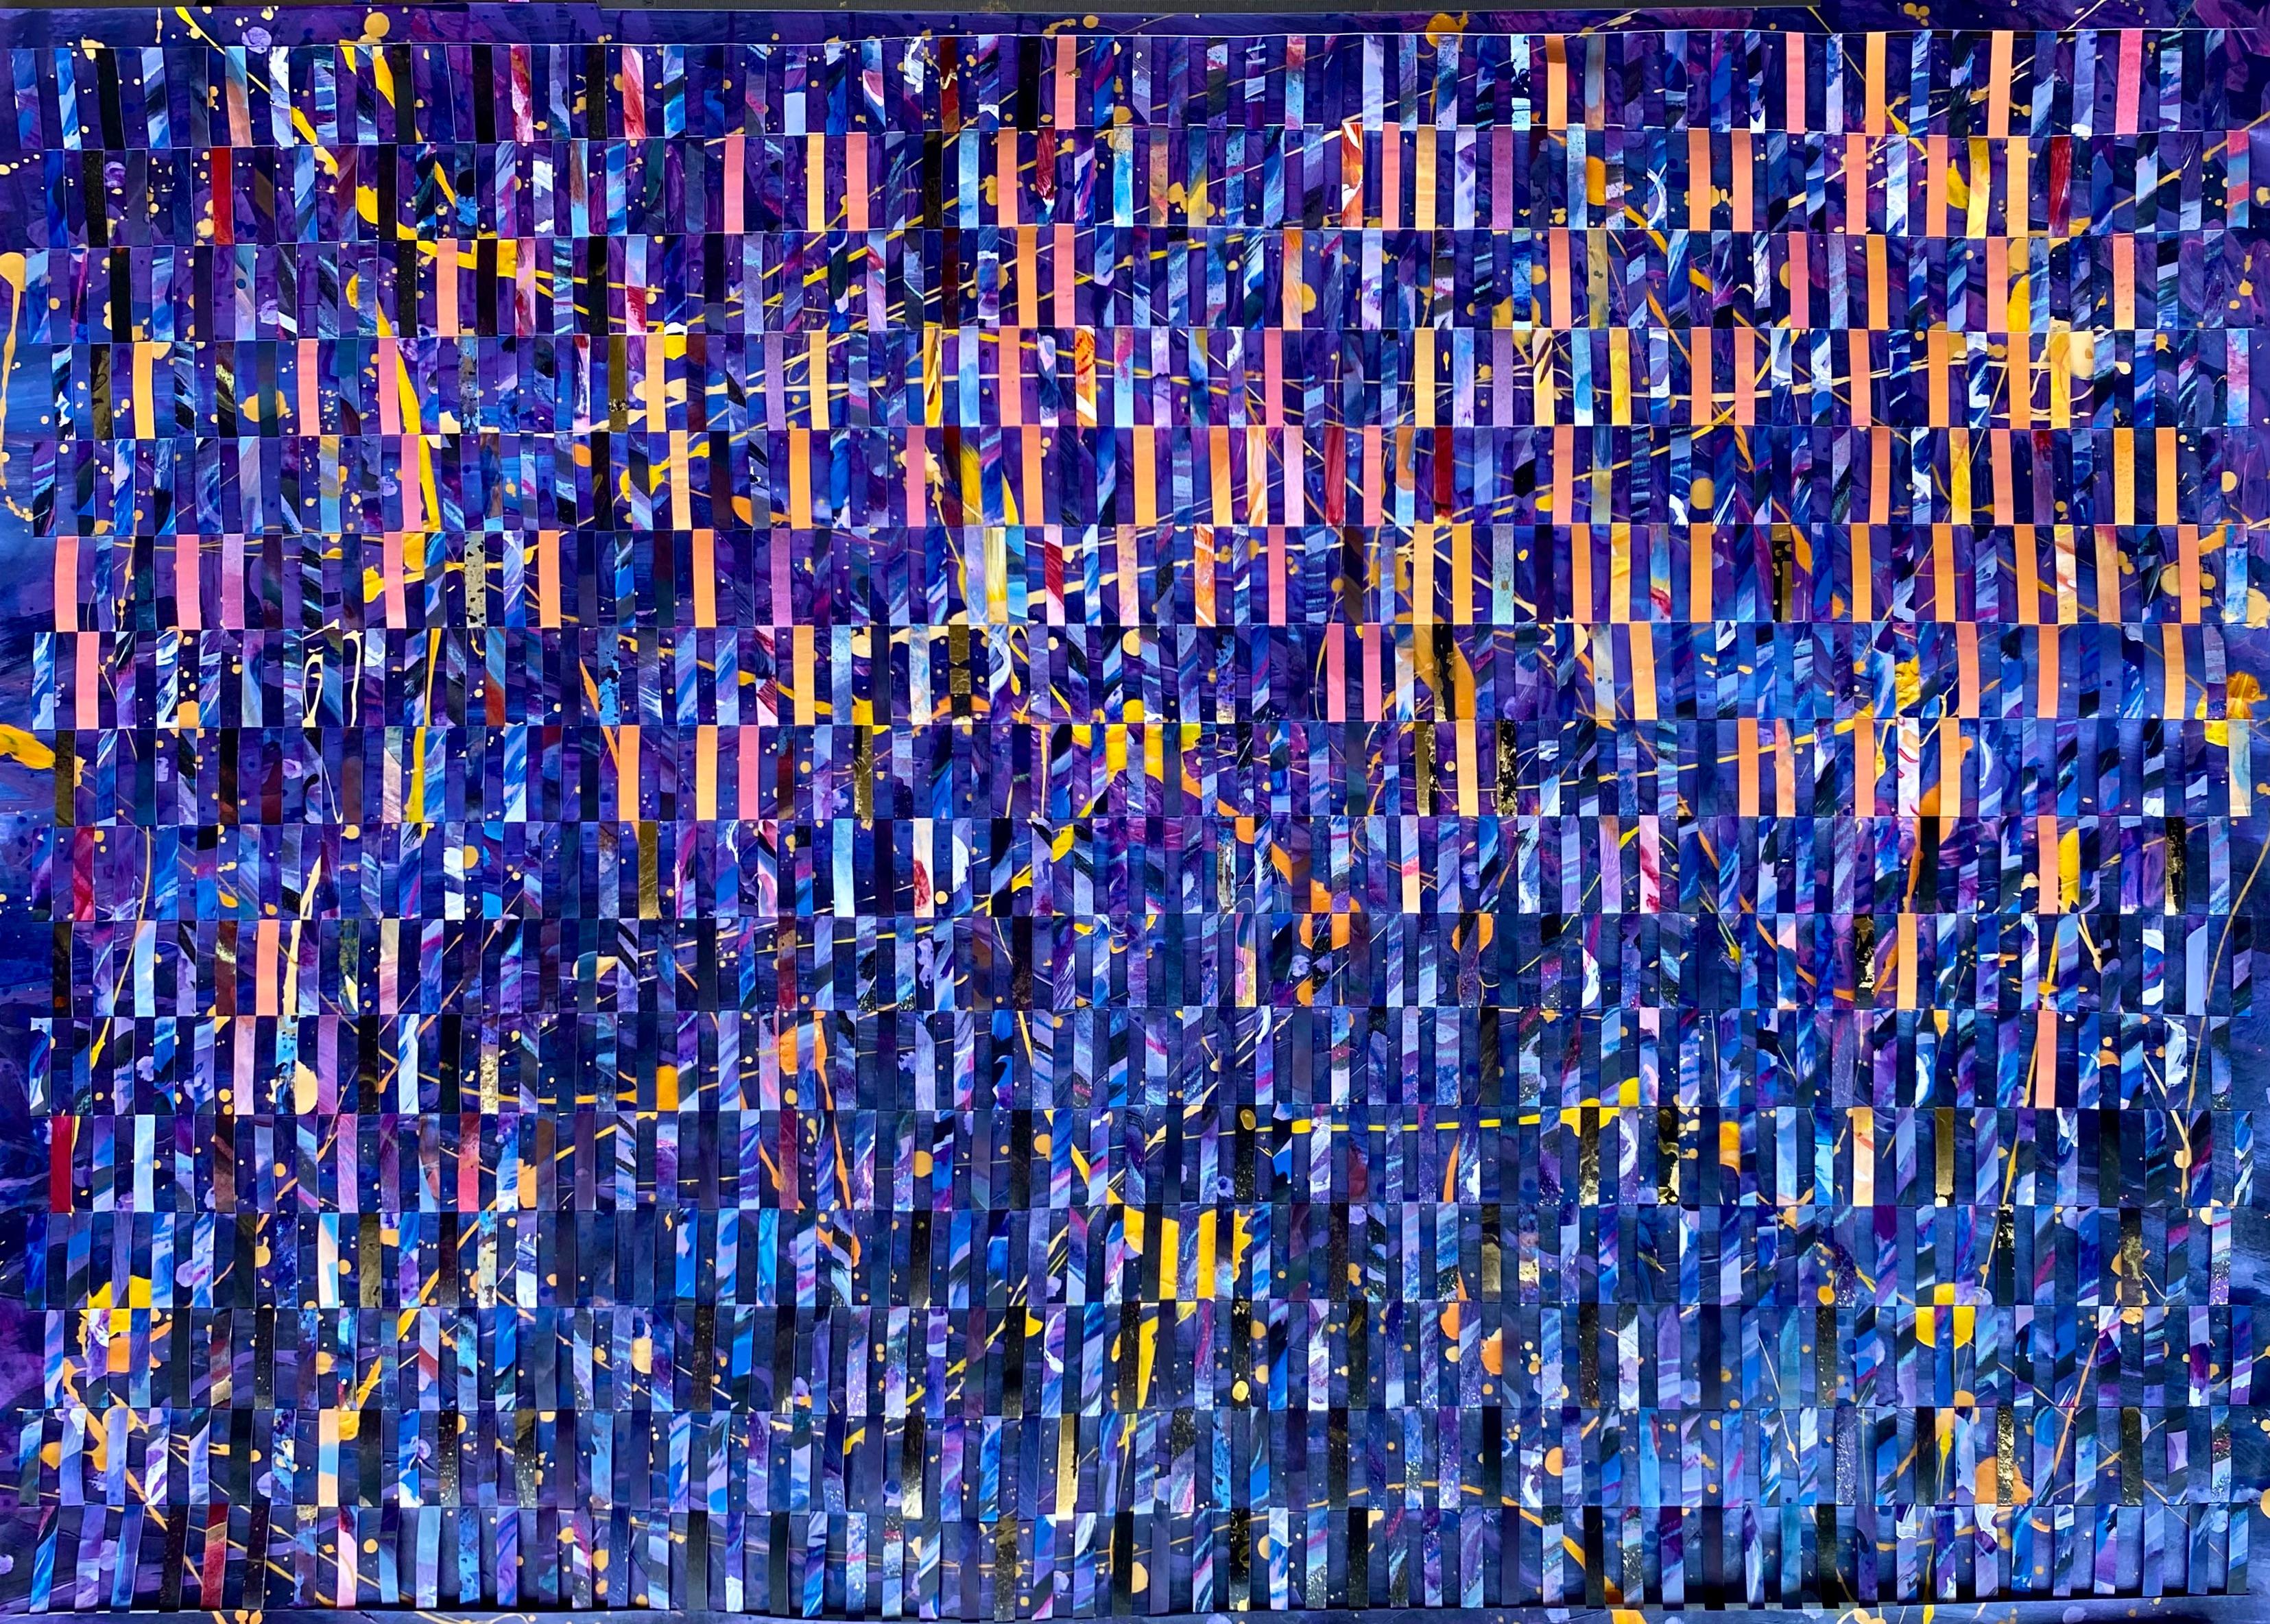 Blue Mixed Media on Woven Fabriano Painting "Flashes of Movement" - Mixed Media Art by Anushka Kempken